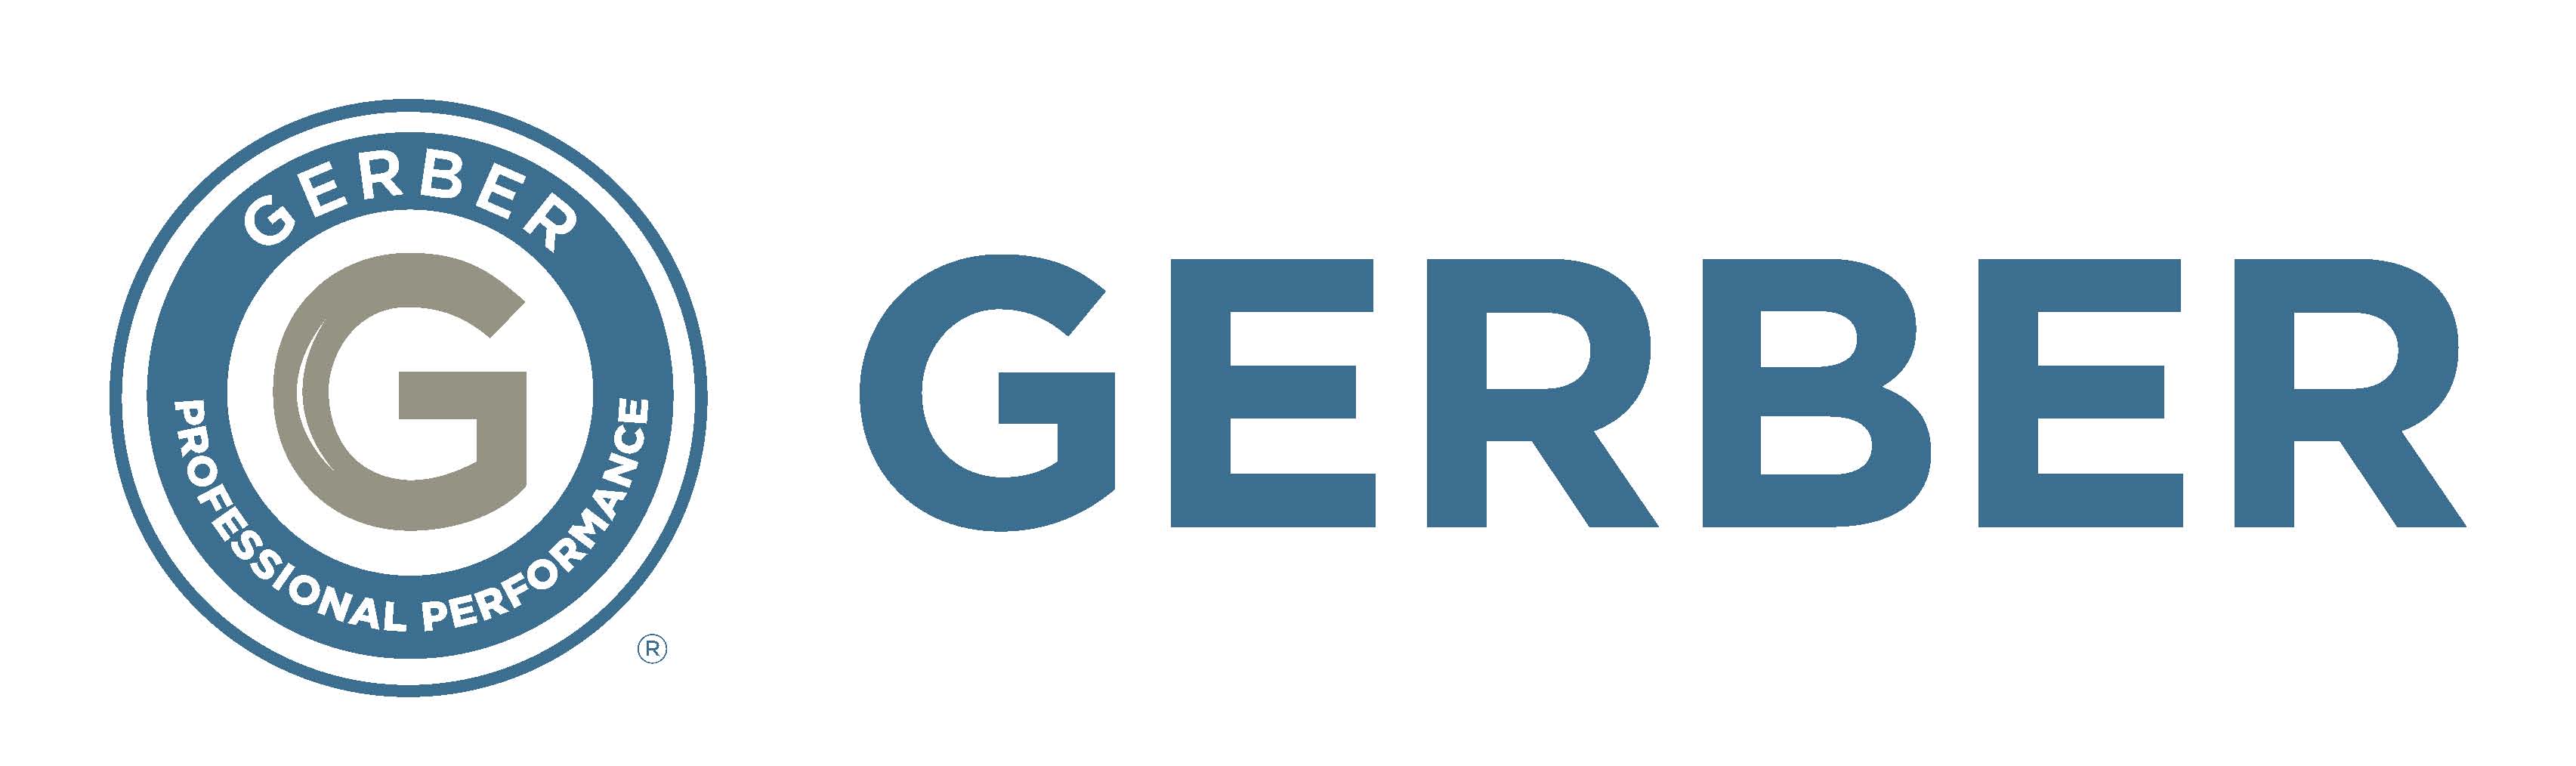 Gerber Plumbing Fixtures LLC Logo photo - 1